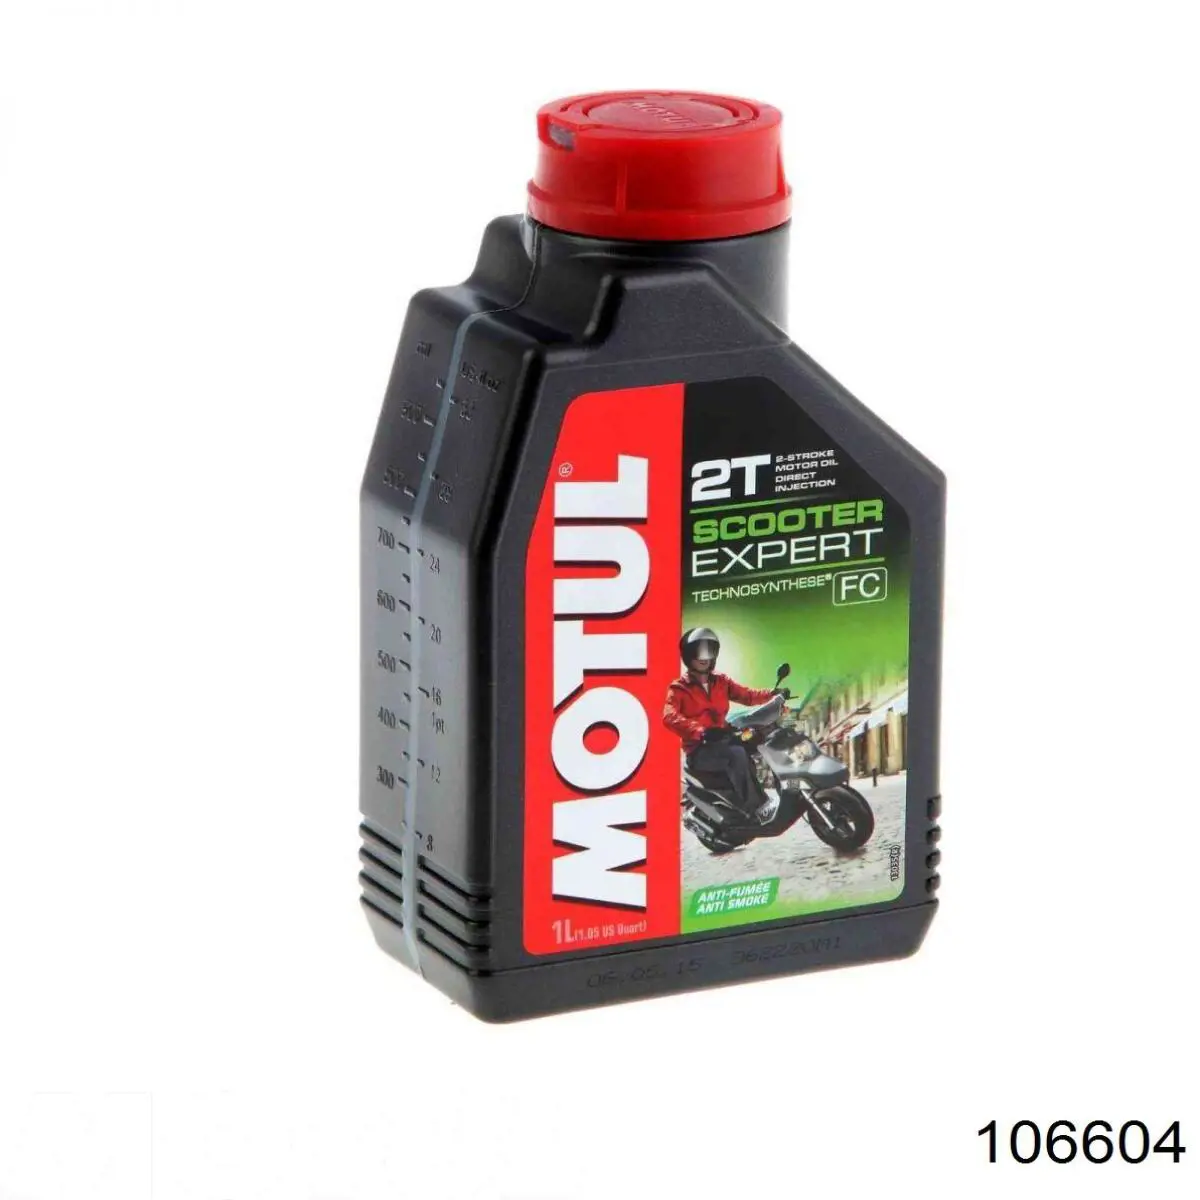 Моторное масло Motul Scooter Expert 2T Полусинтетическое 1л (106604)